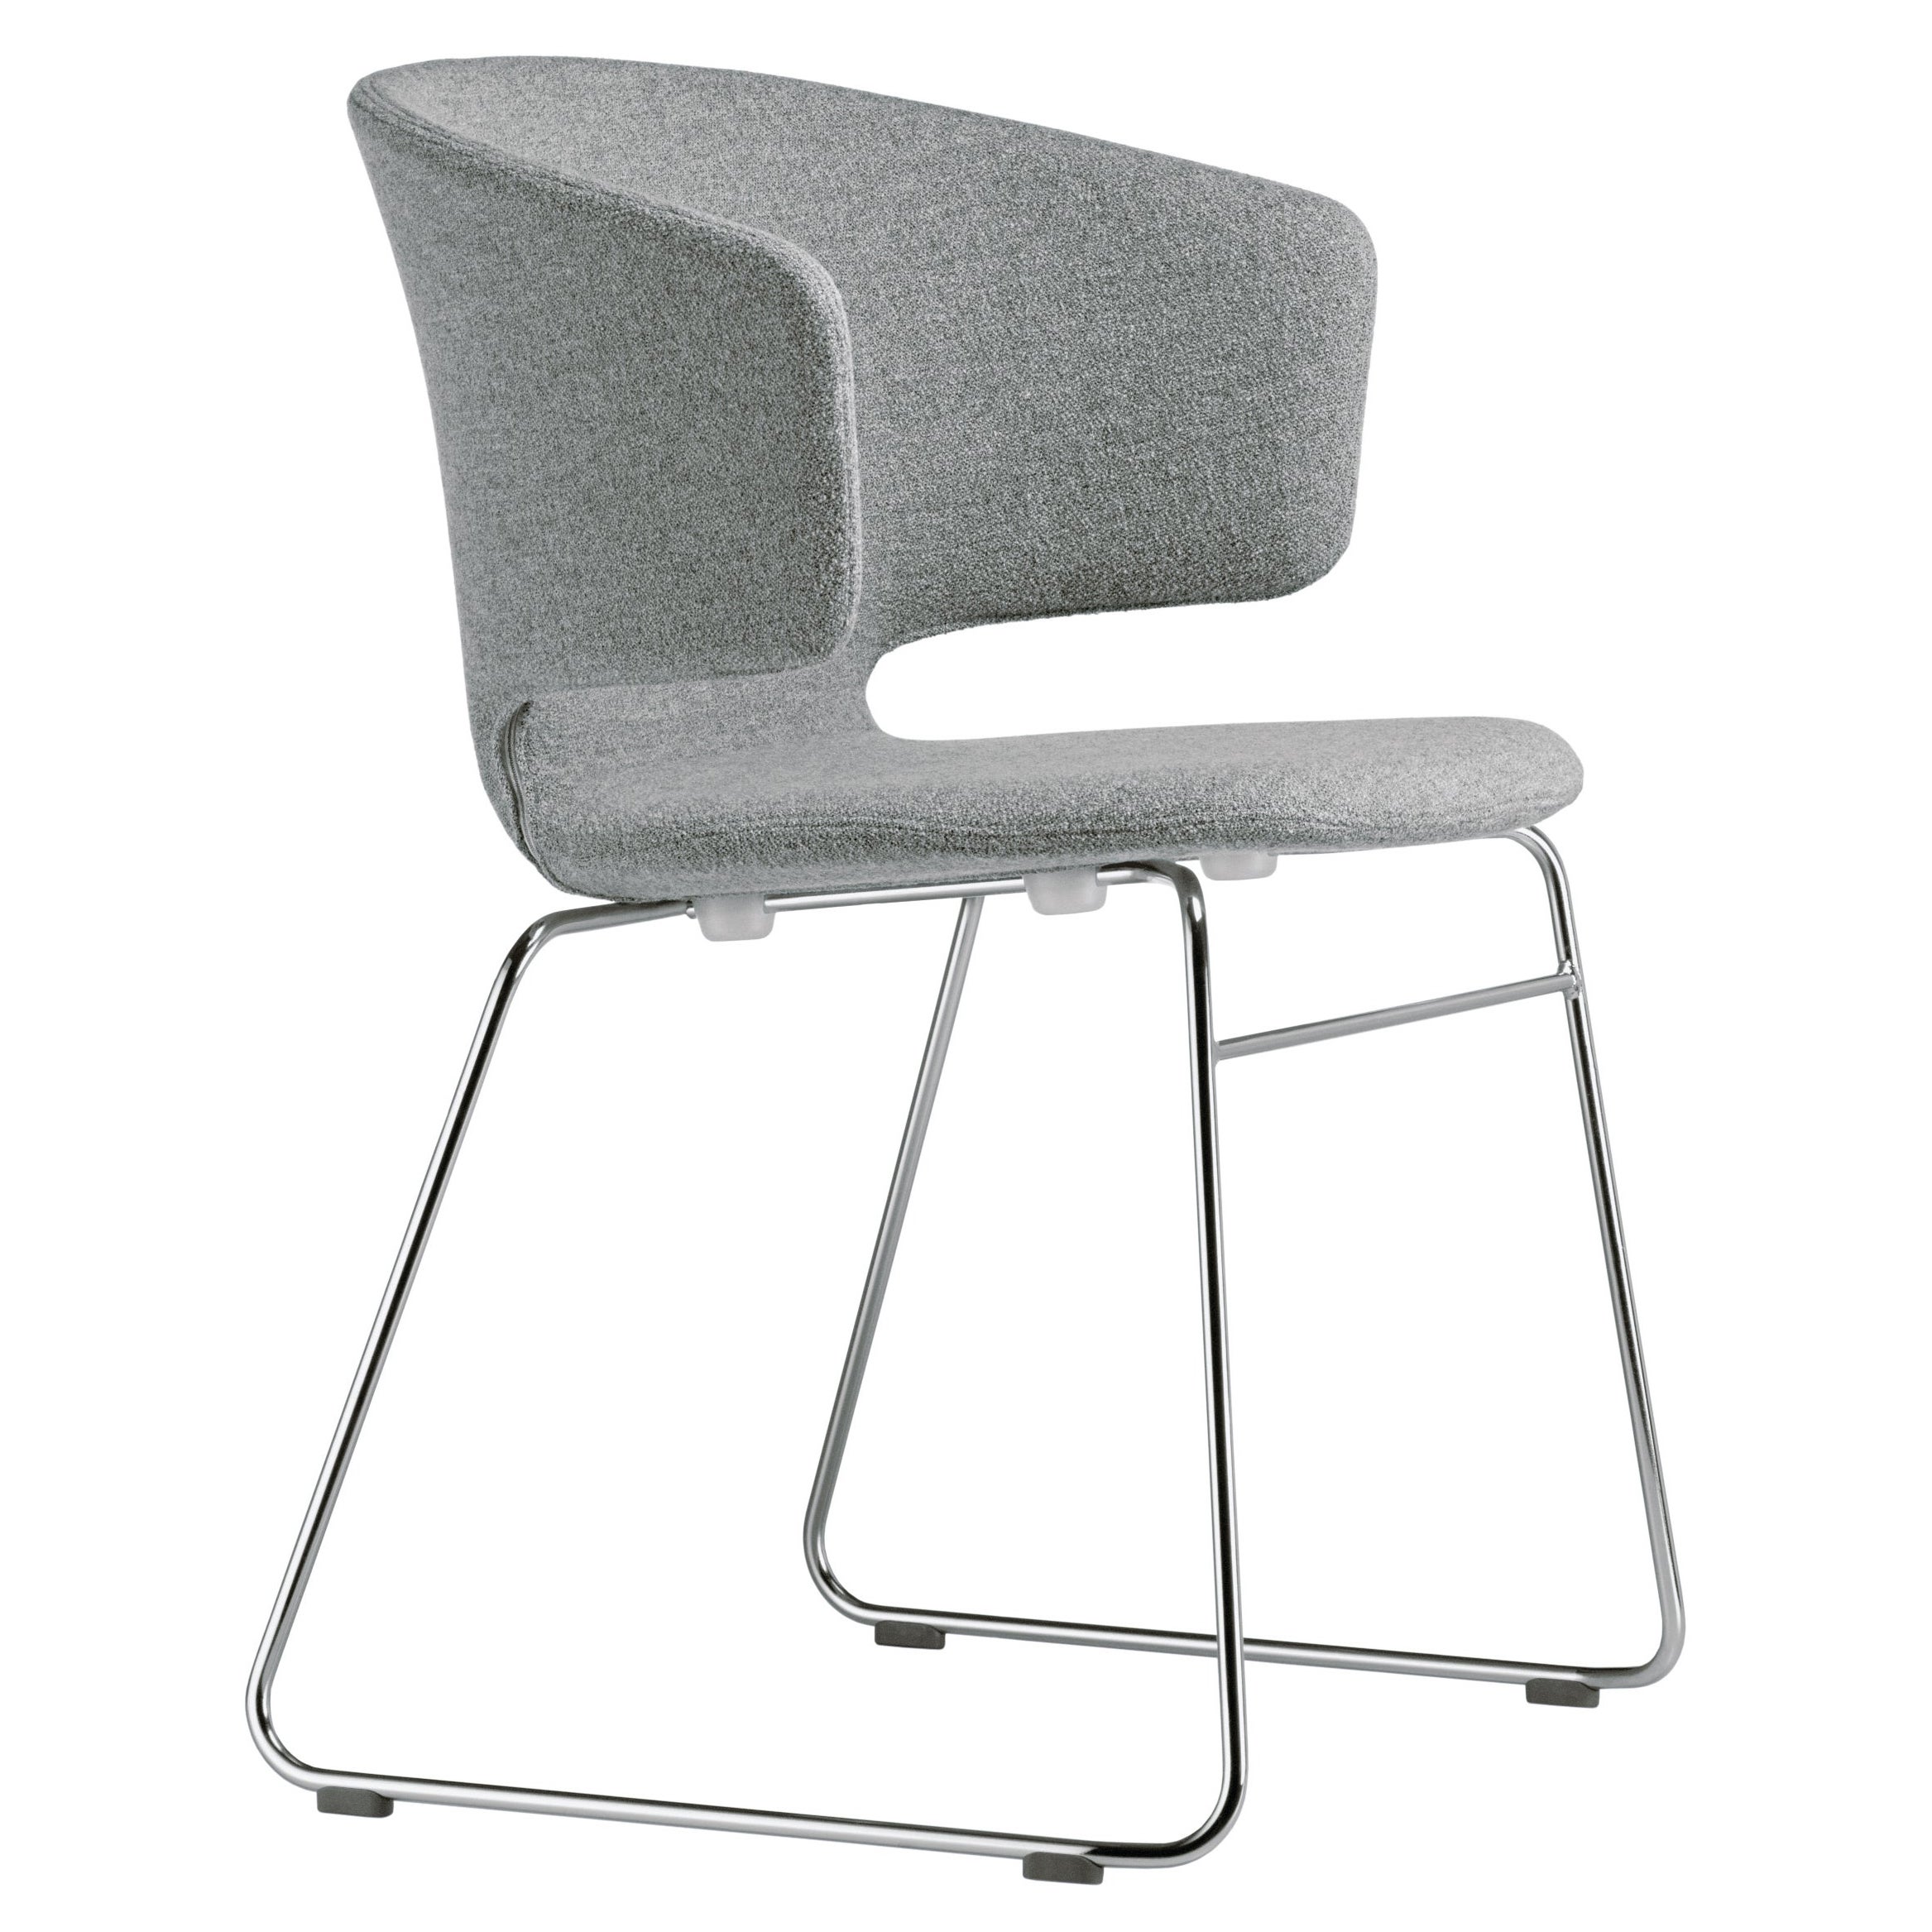 Alias 504 Taormina Sledge Chair in Grey & Chromed Steel Frame by Alfredo Häberli For Sale